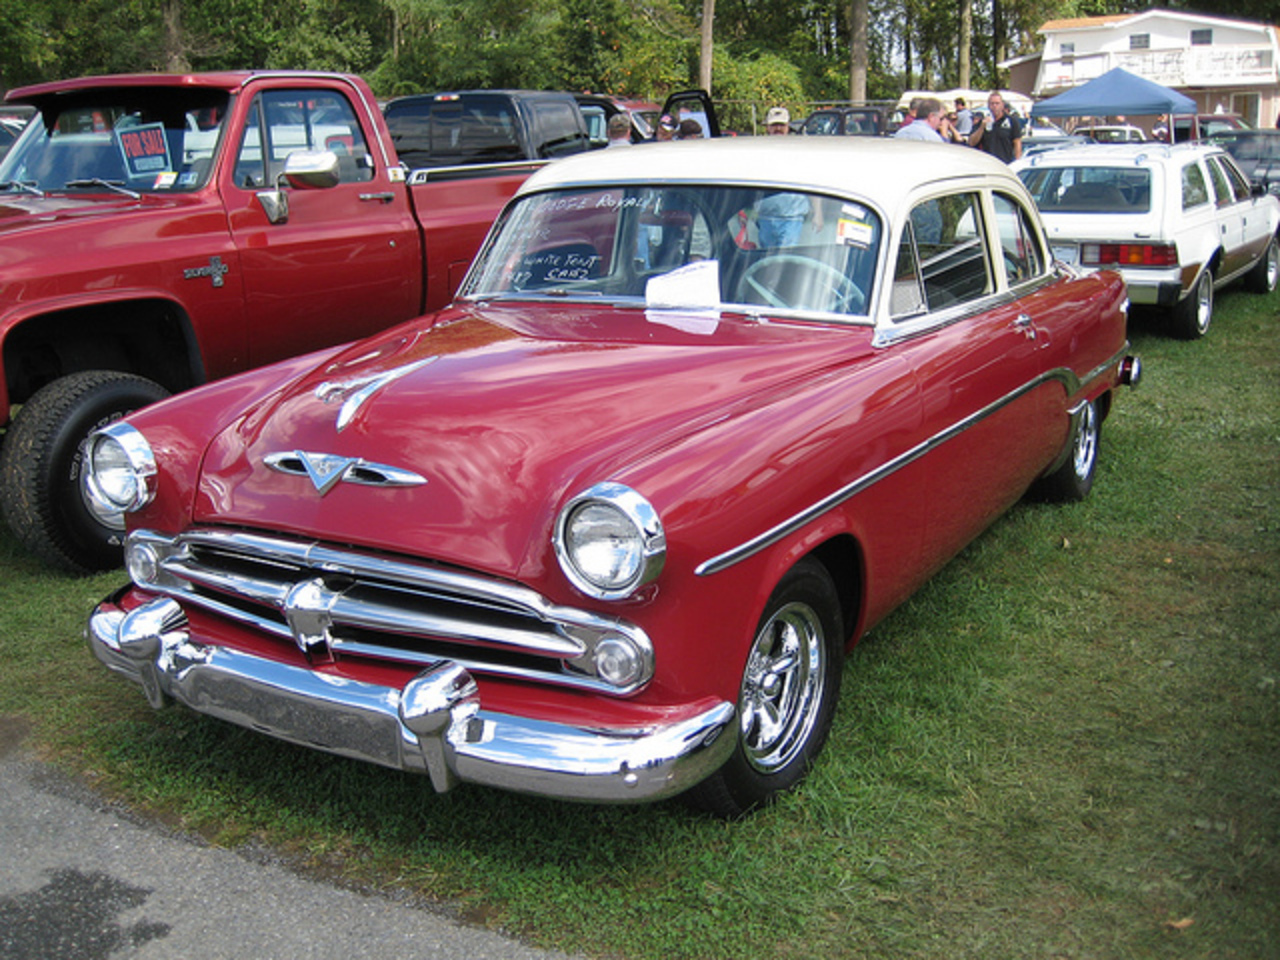 1954 Dodge Royal - Red Ram Hemi | Flickr - Photo Sharing!